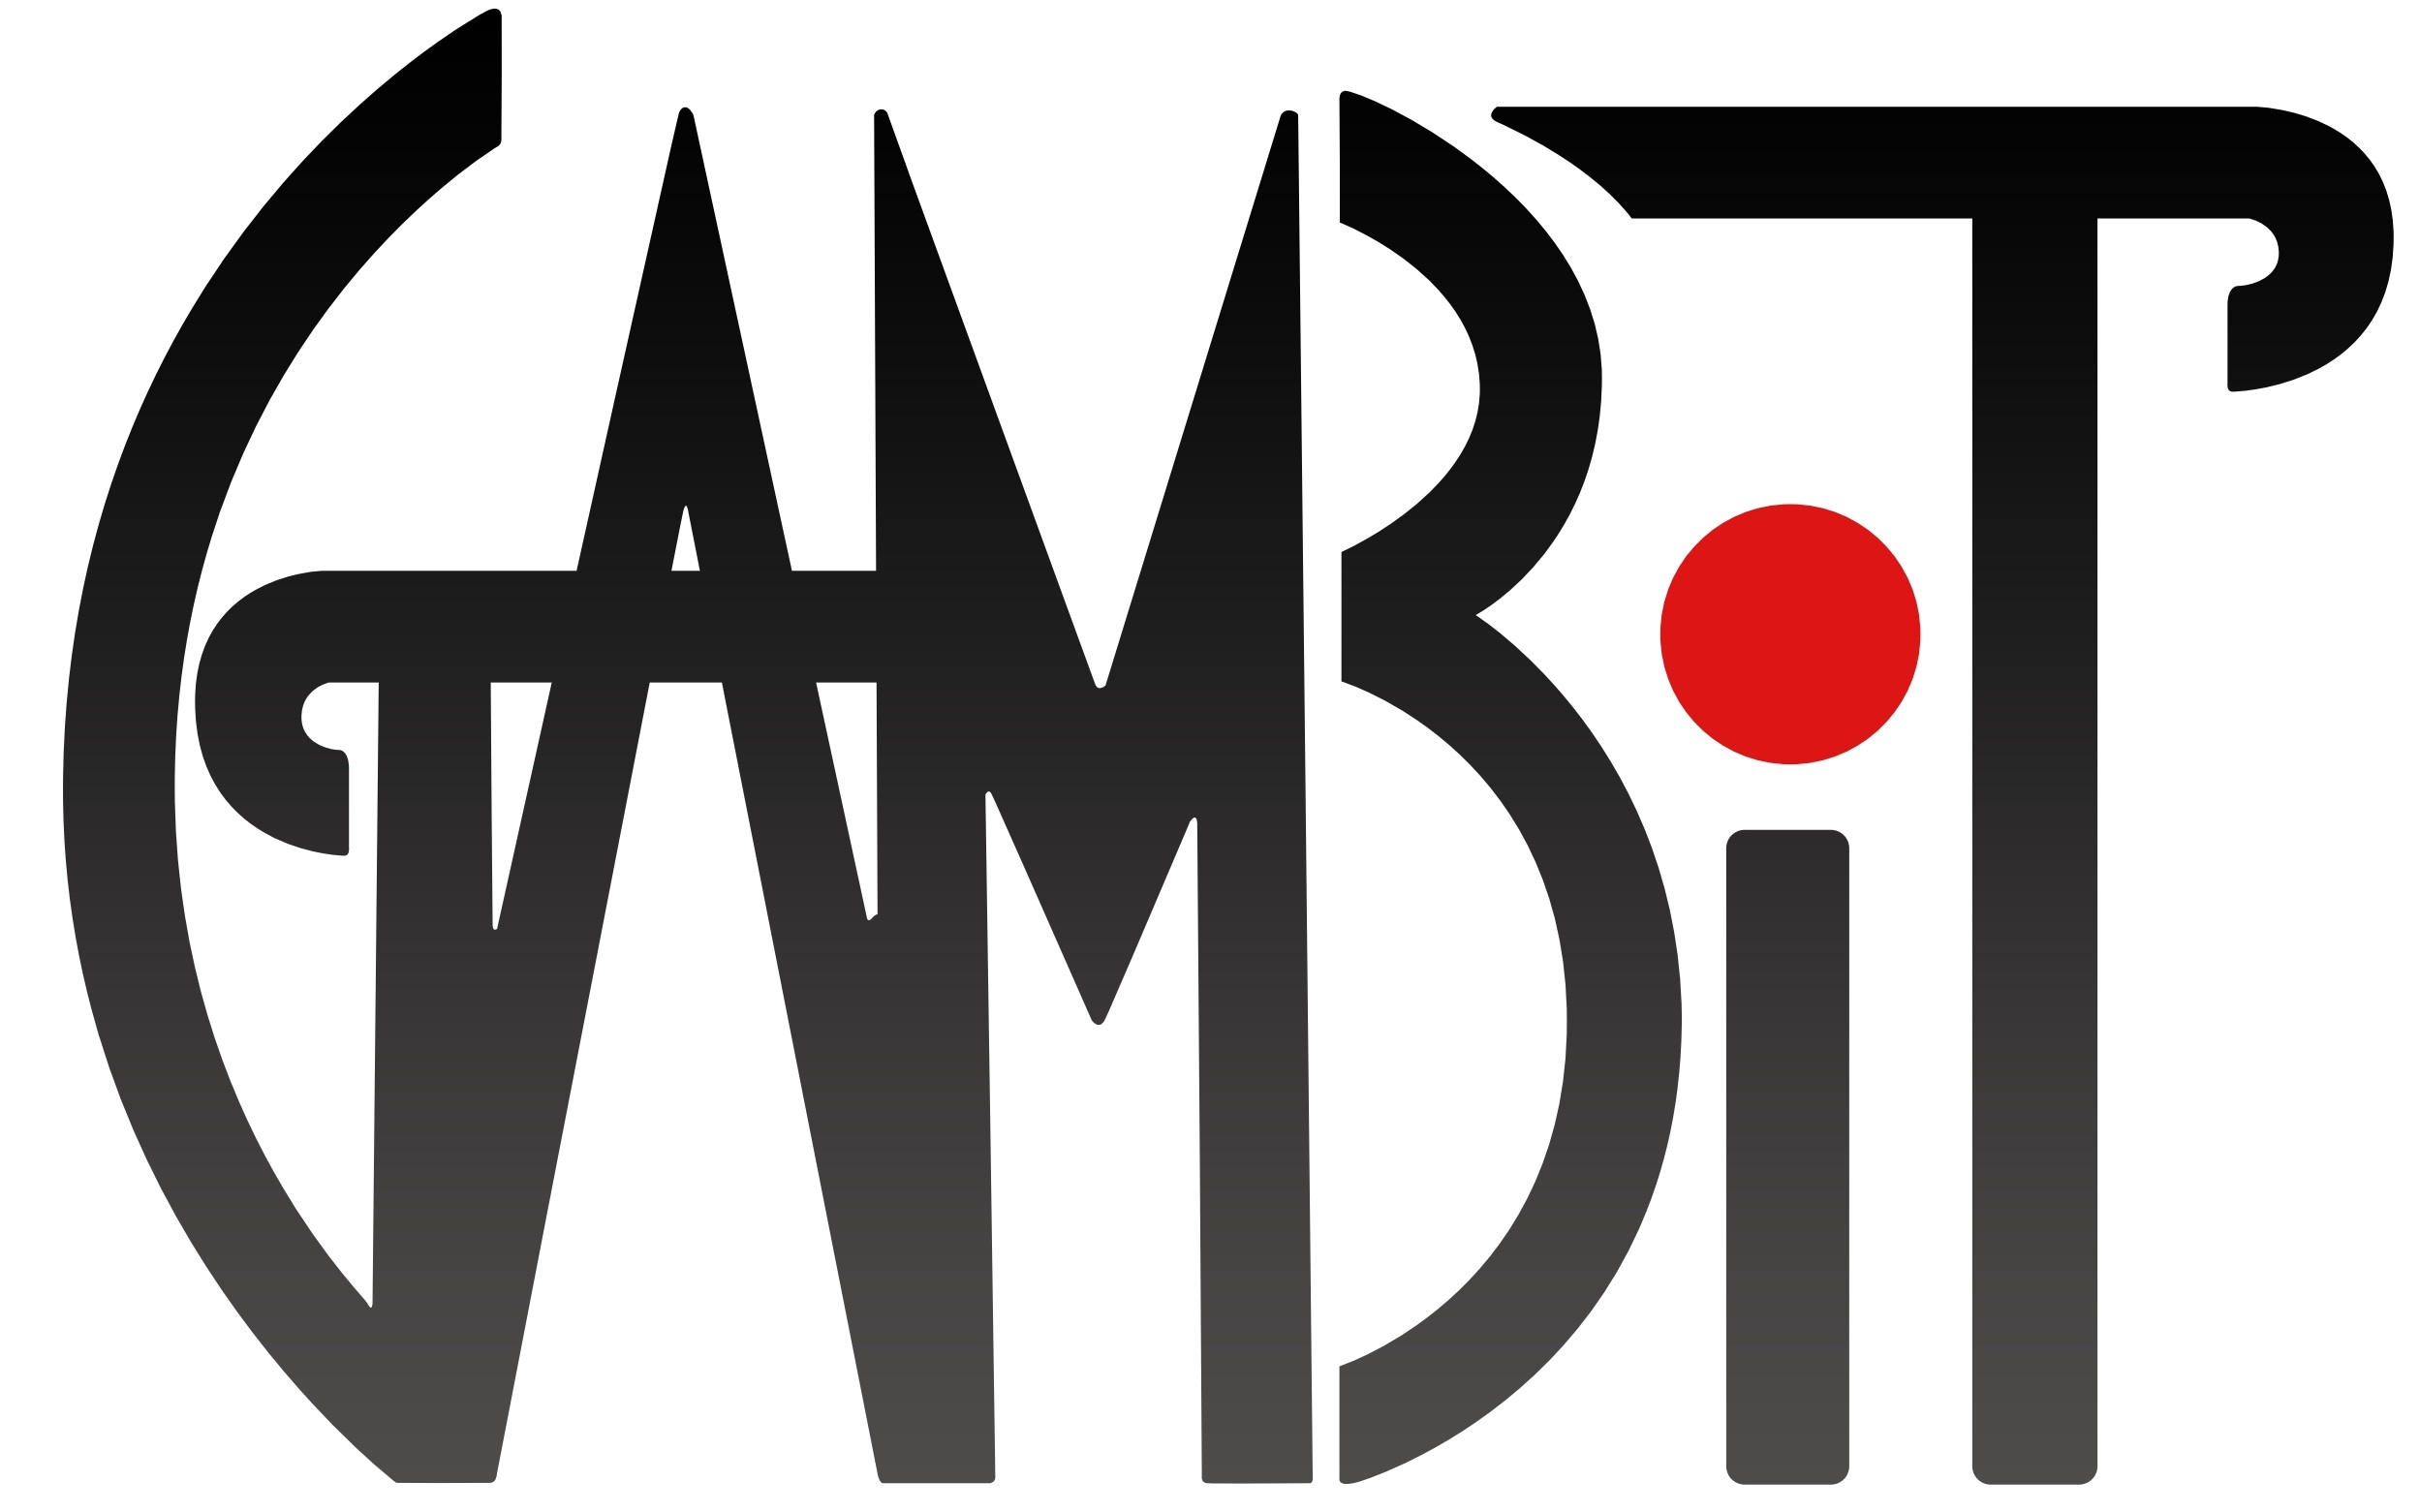 GAMBIT Logo.jpg ac461bf50f7e98ec8d467058ed163223